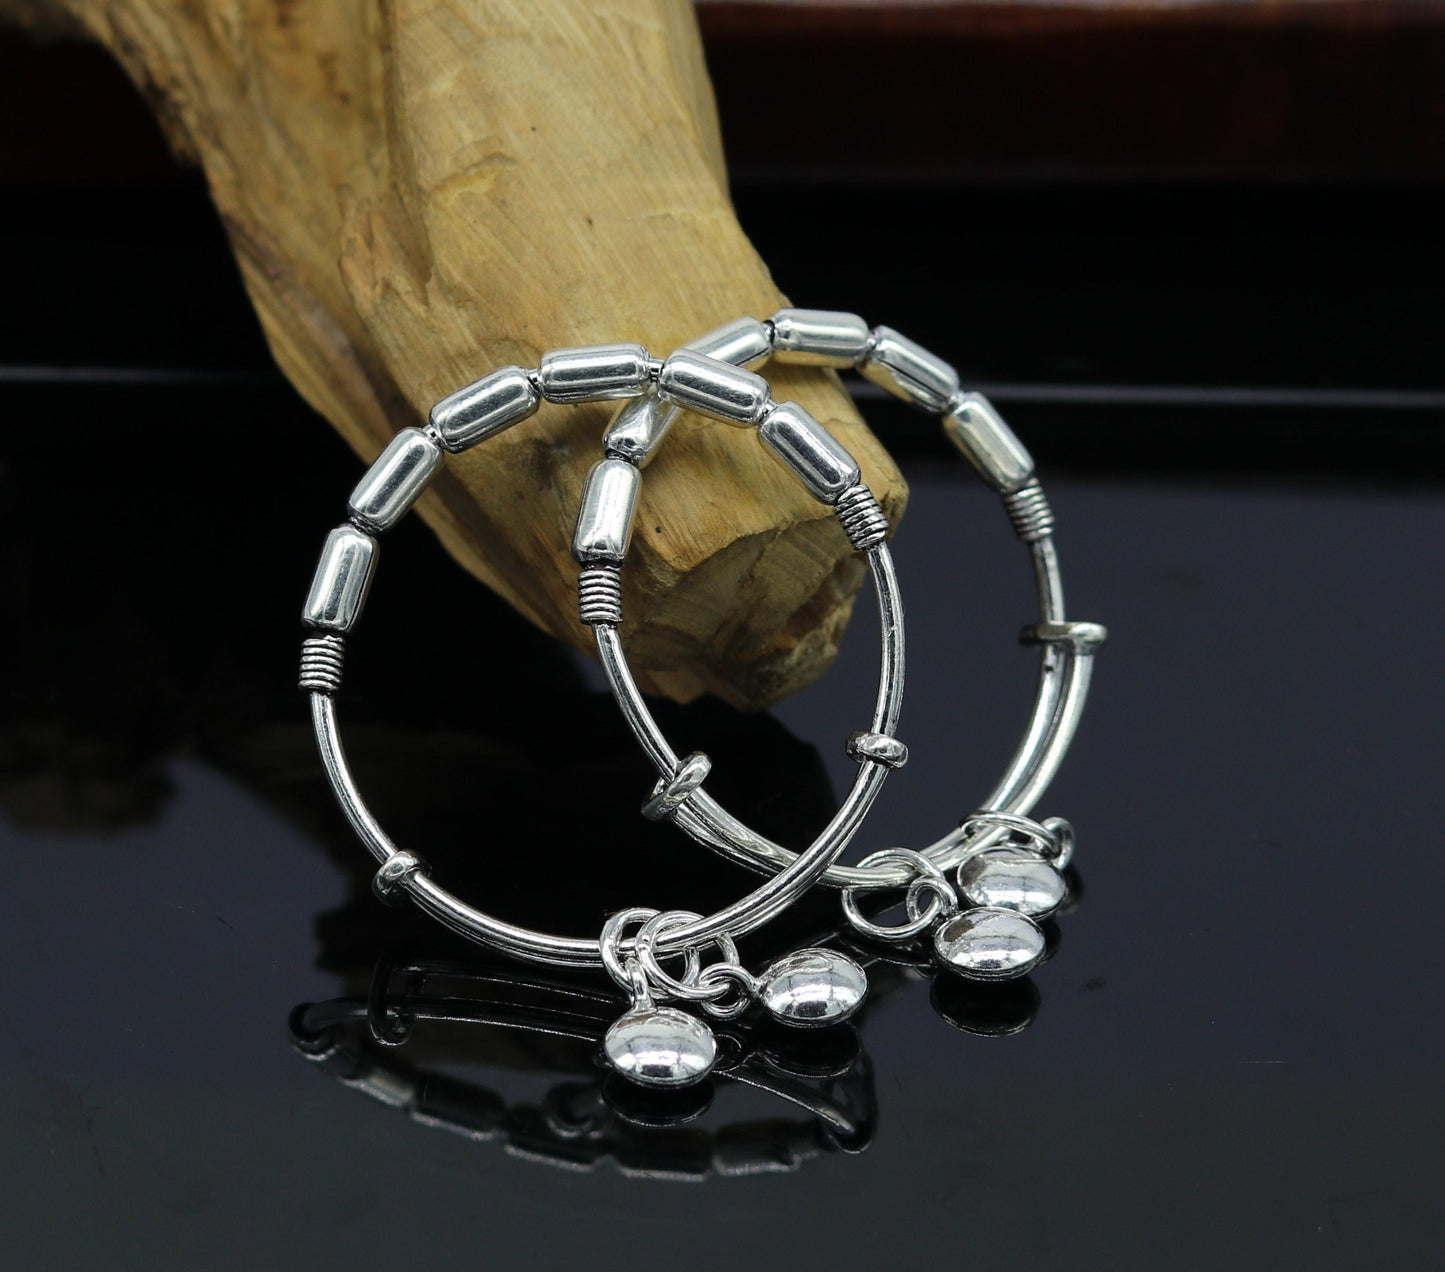 Exclusive 925 sterling silver handmade adjustable baby bangle kada bracelet, fabulous heart shape hangings charm bangles unisex kids bbk72 - TRIBAL ORNAMENTS